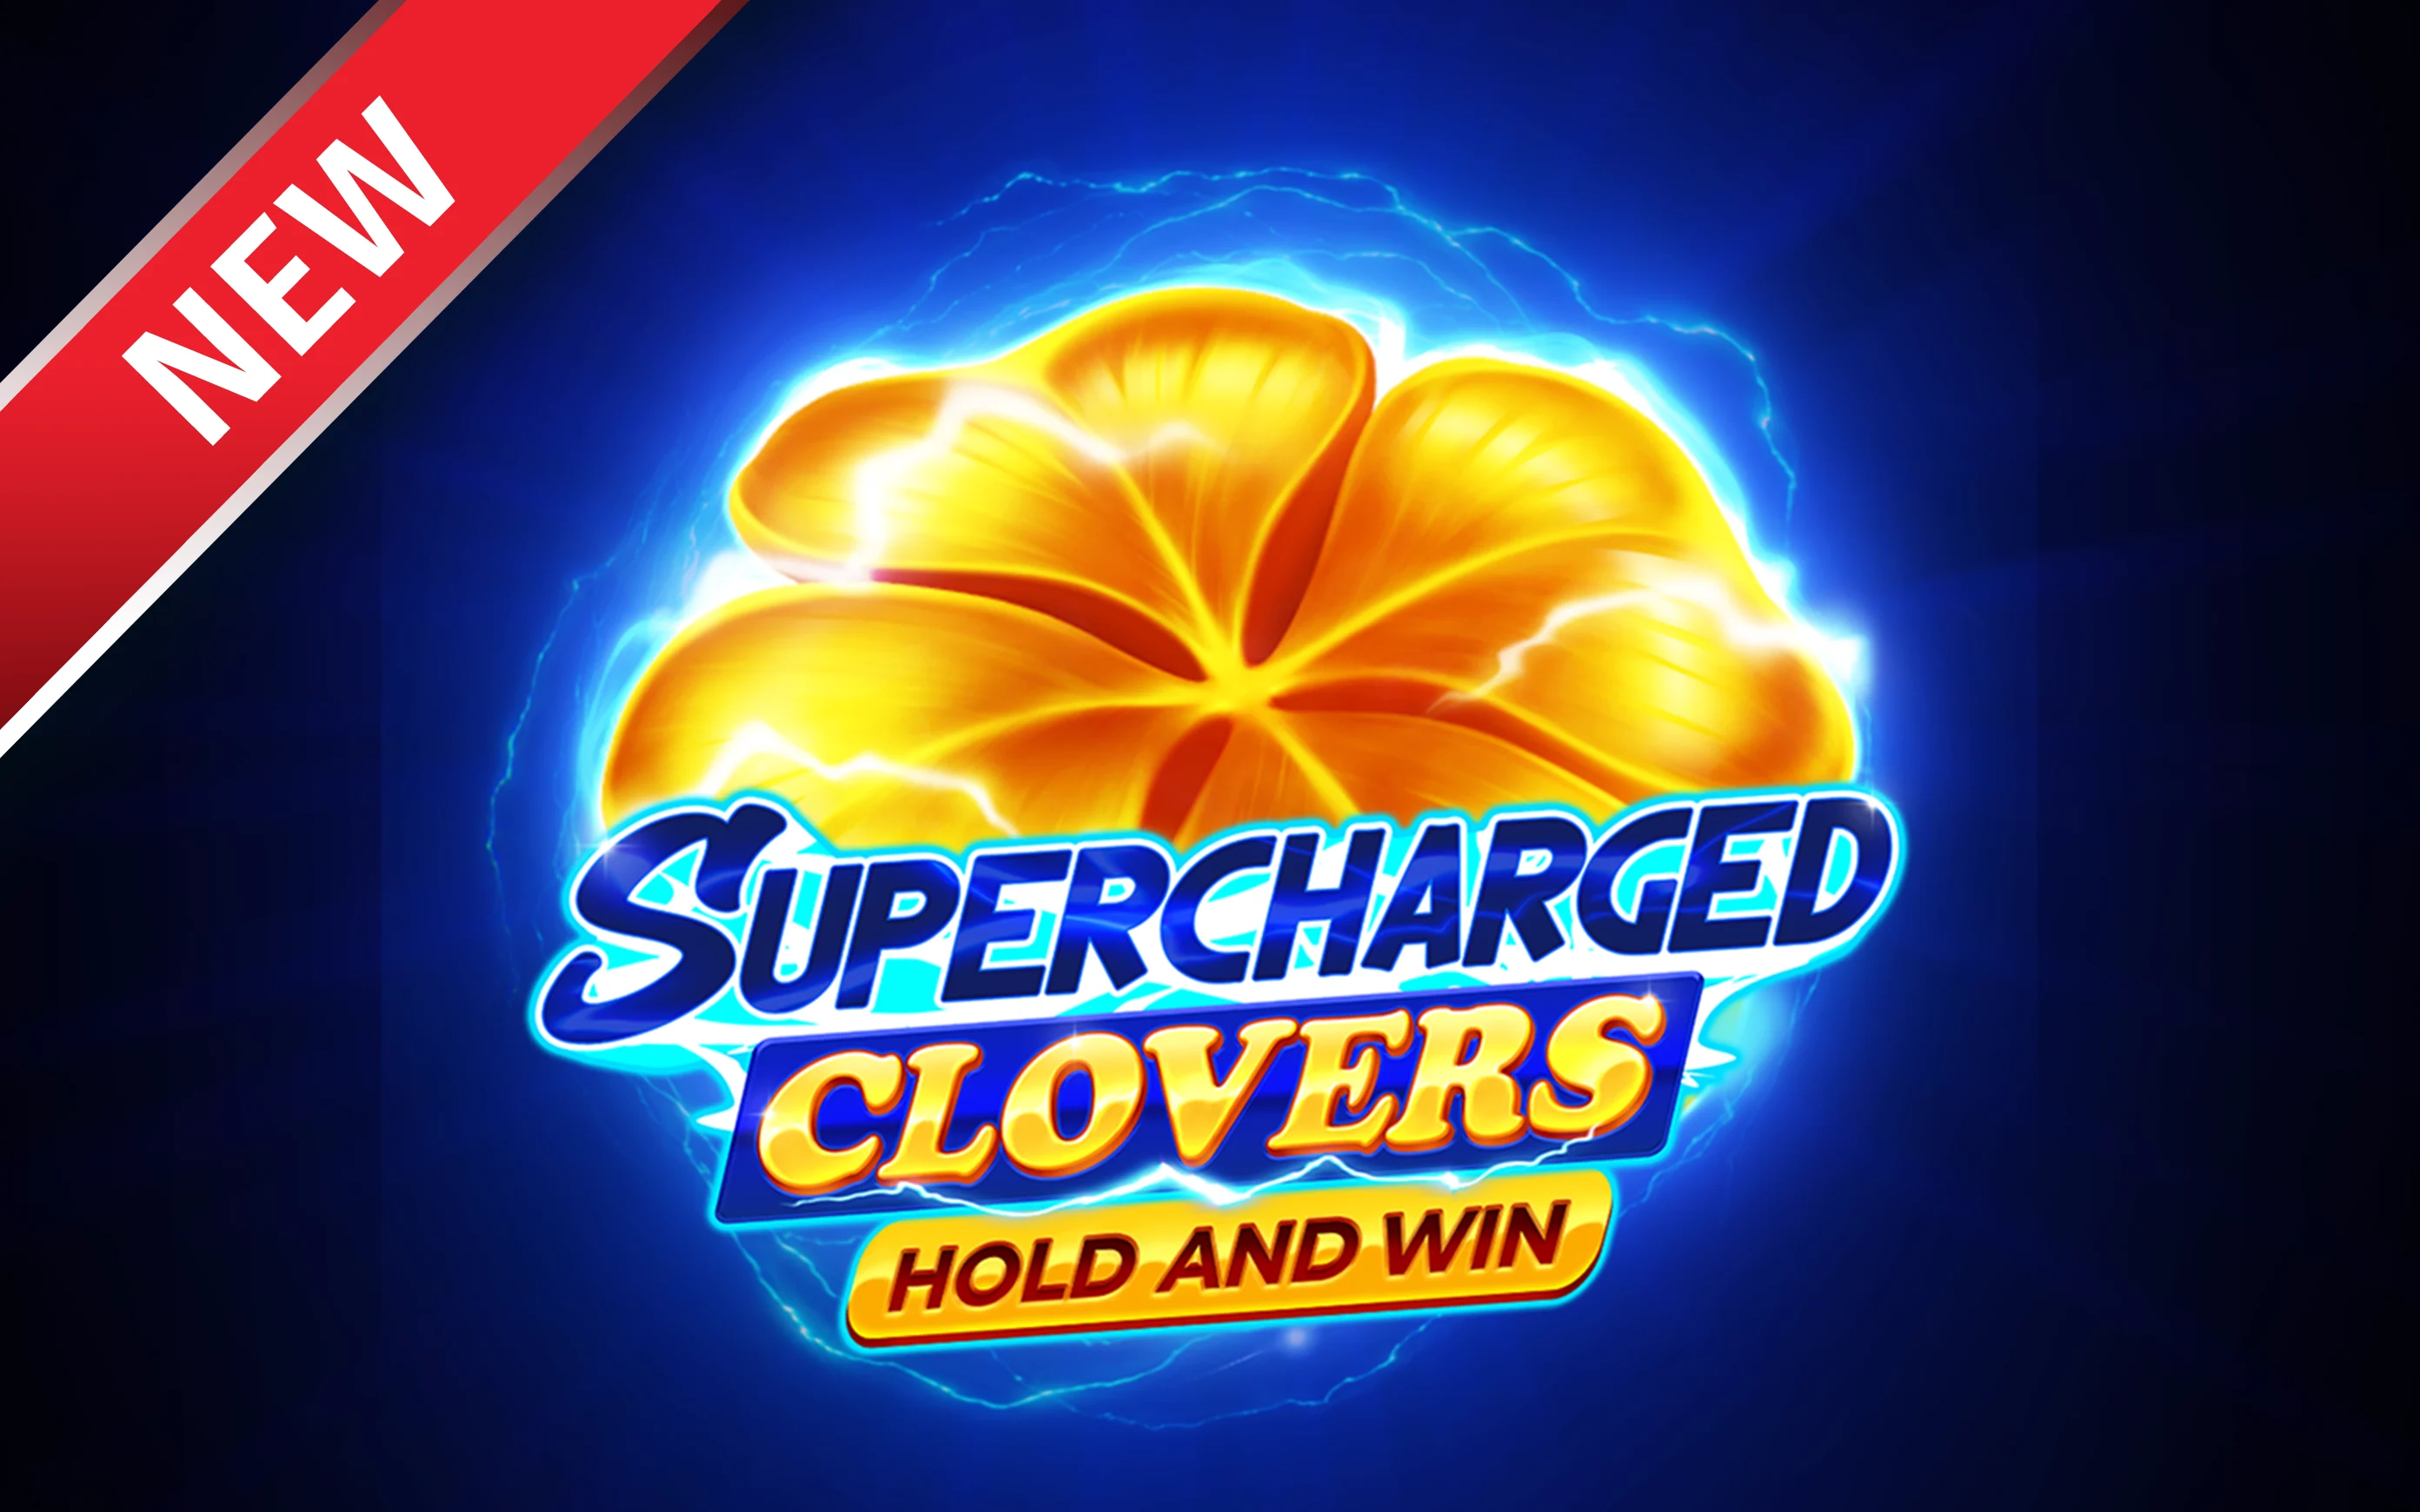 Starcasino.be online casino üzerinden Supercharged Clovers: Hold and Win oynayın